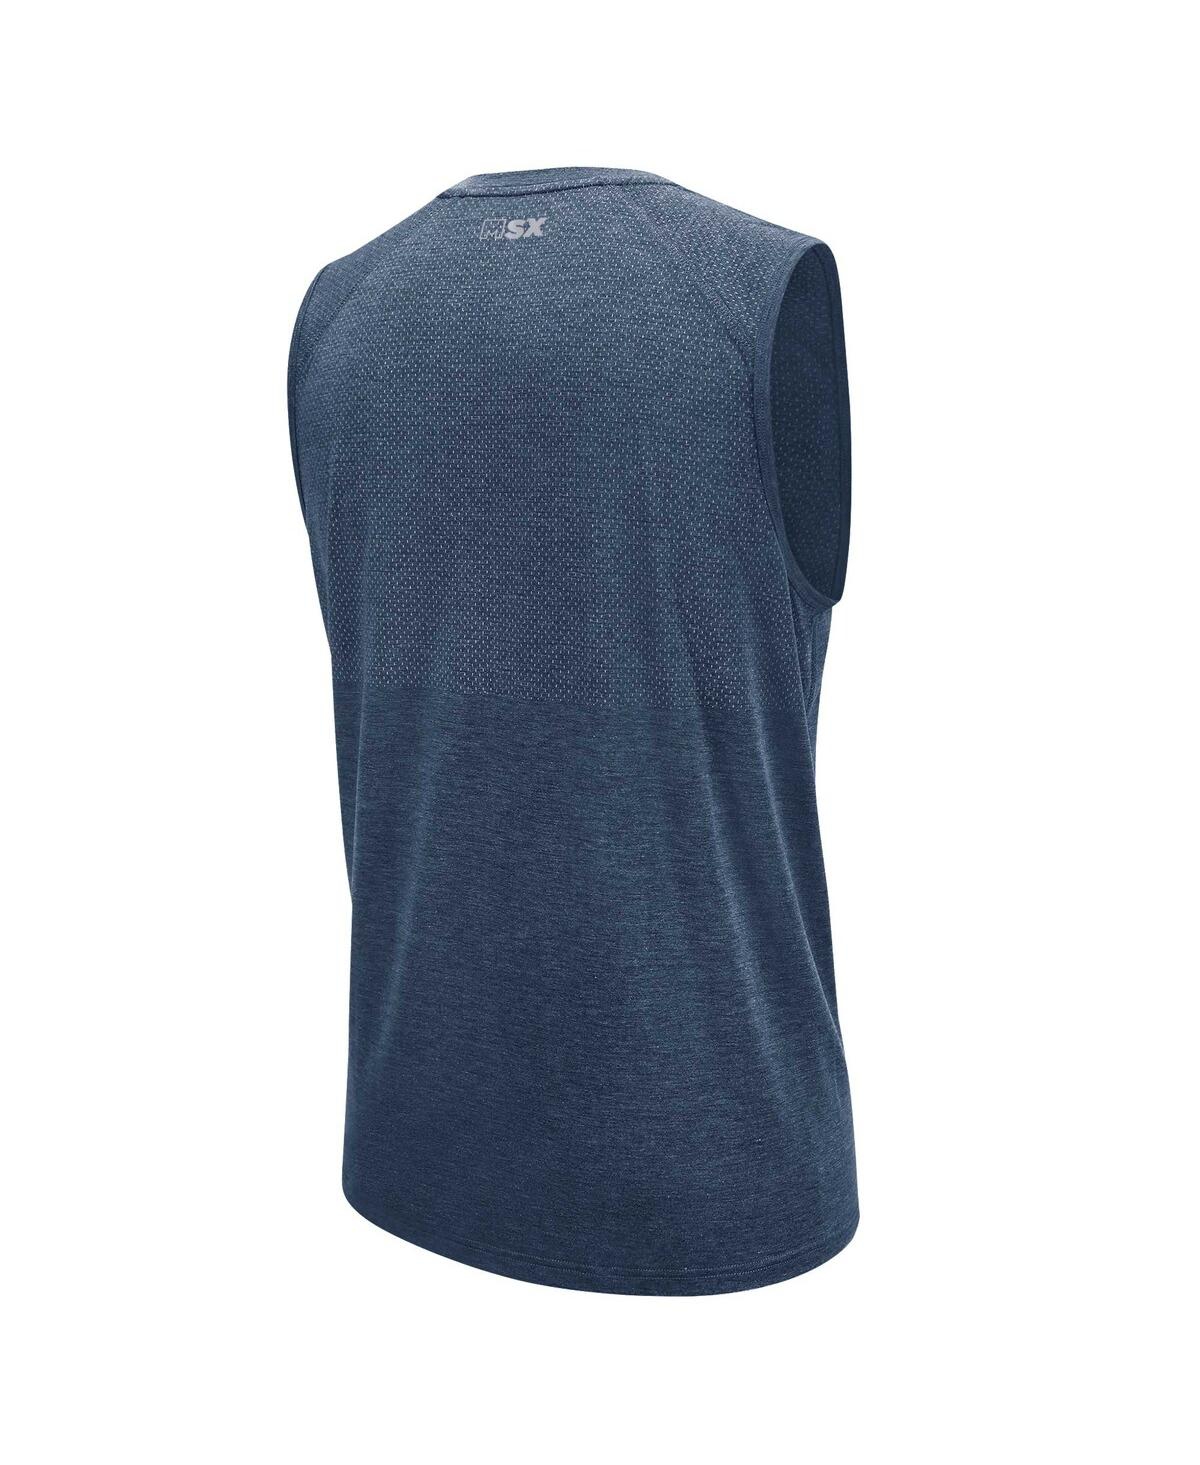 Shop Msx By Michael Strahan Men's  Navy Chicago Bears Warm Up Sleeveless T-shirt